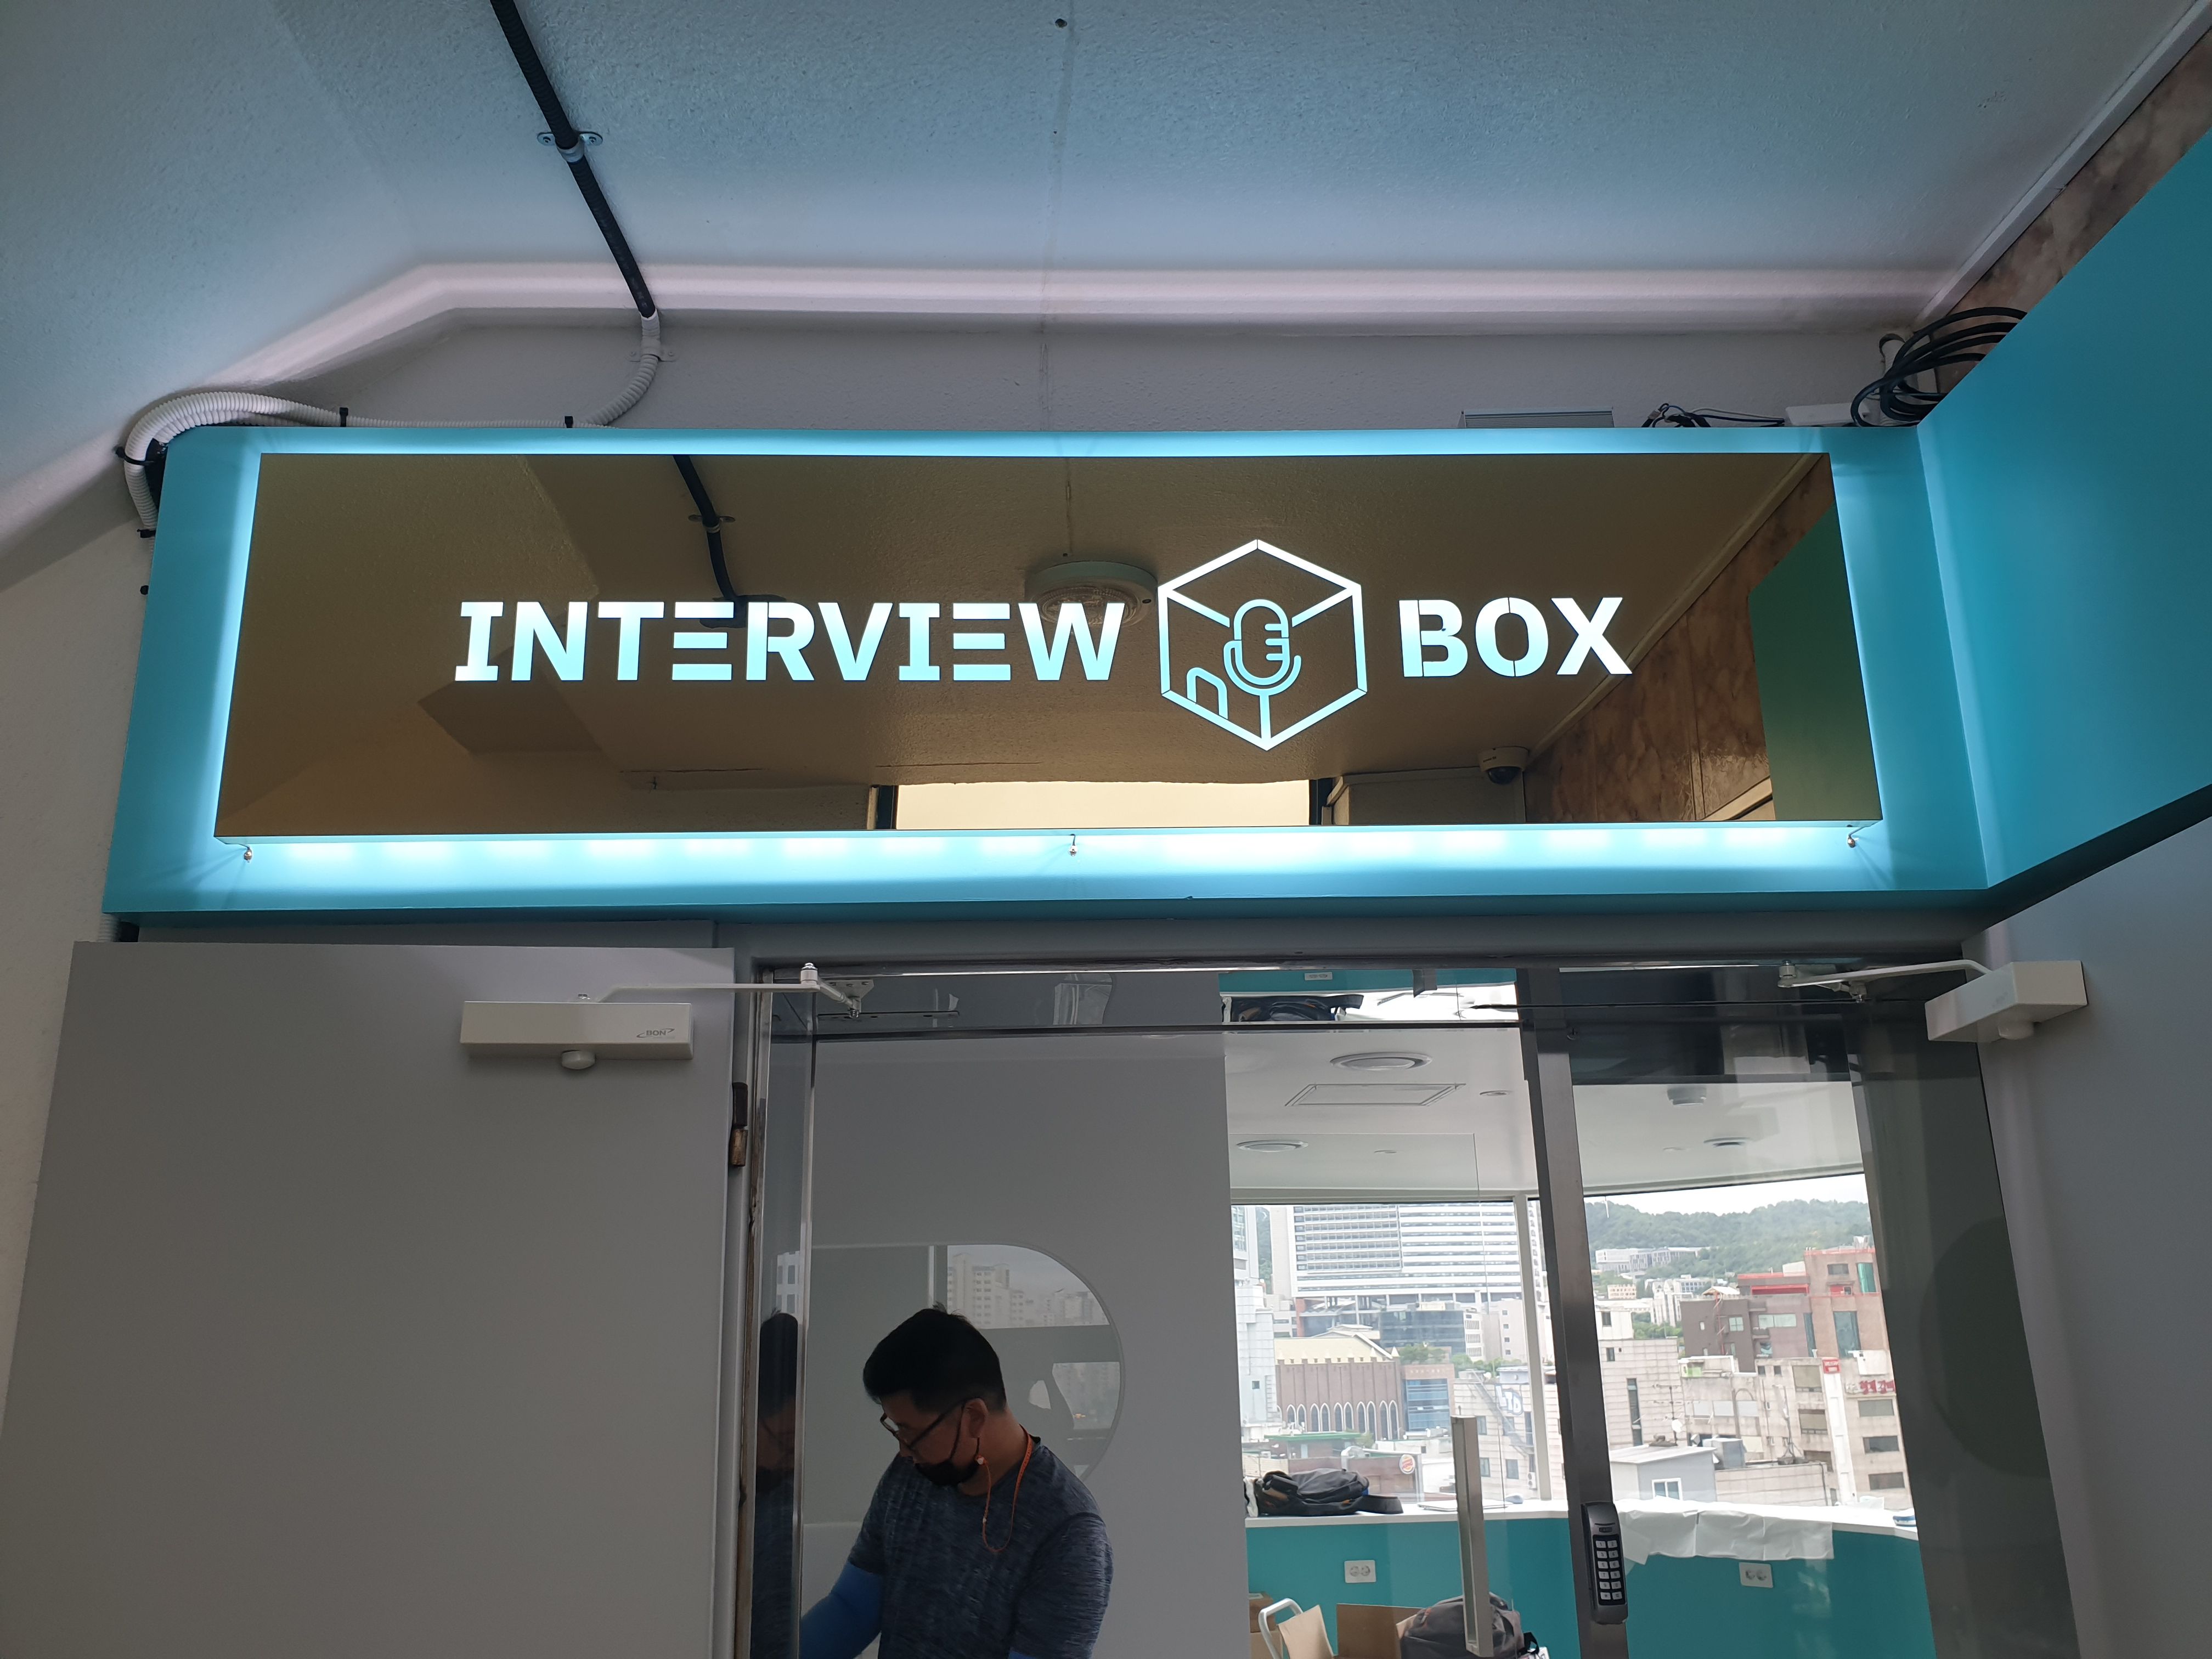 INTERVIEW BOX